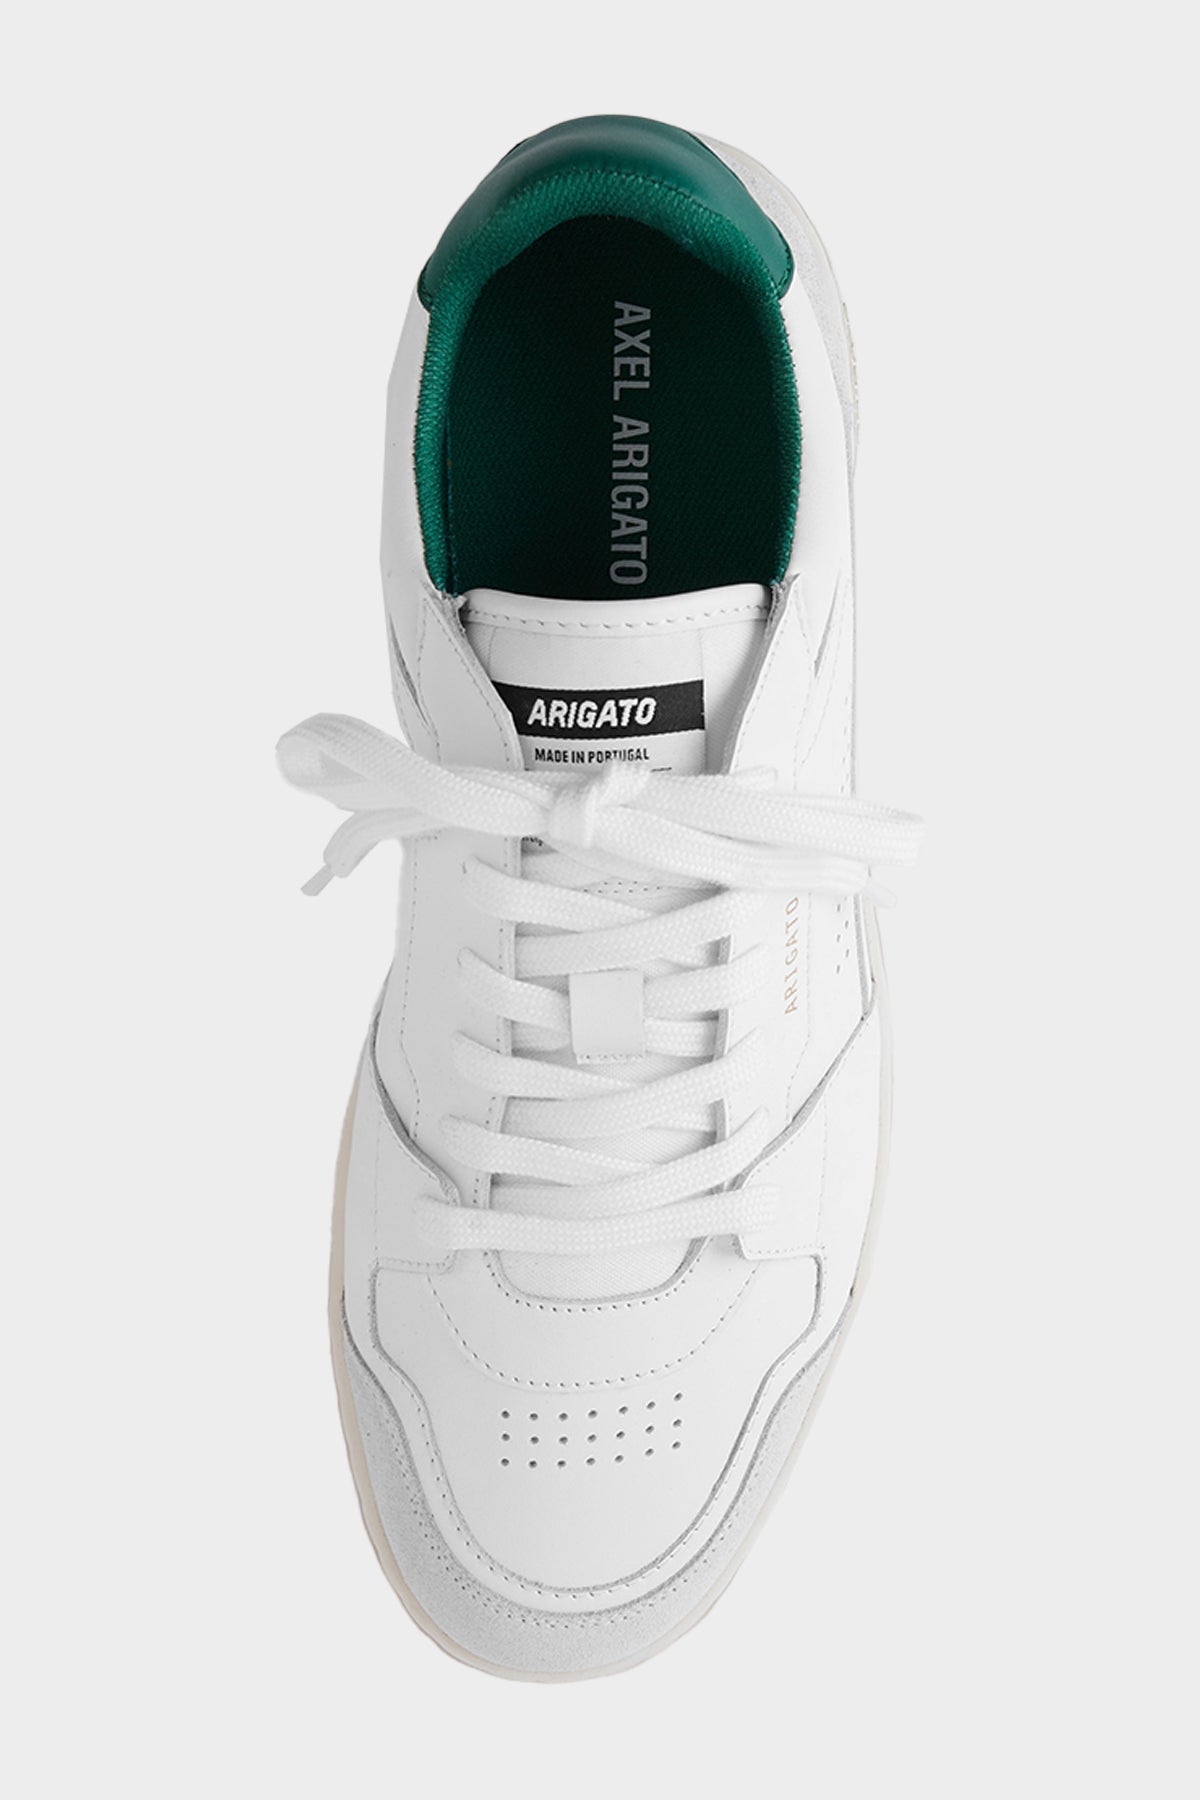 Dice Lo Men Sneaker in White Green - shop-olivia.com